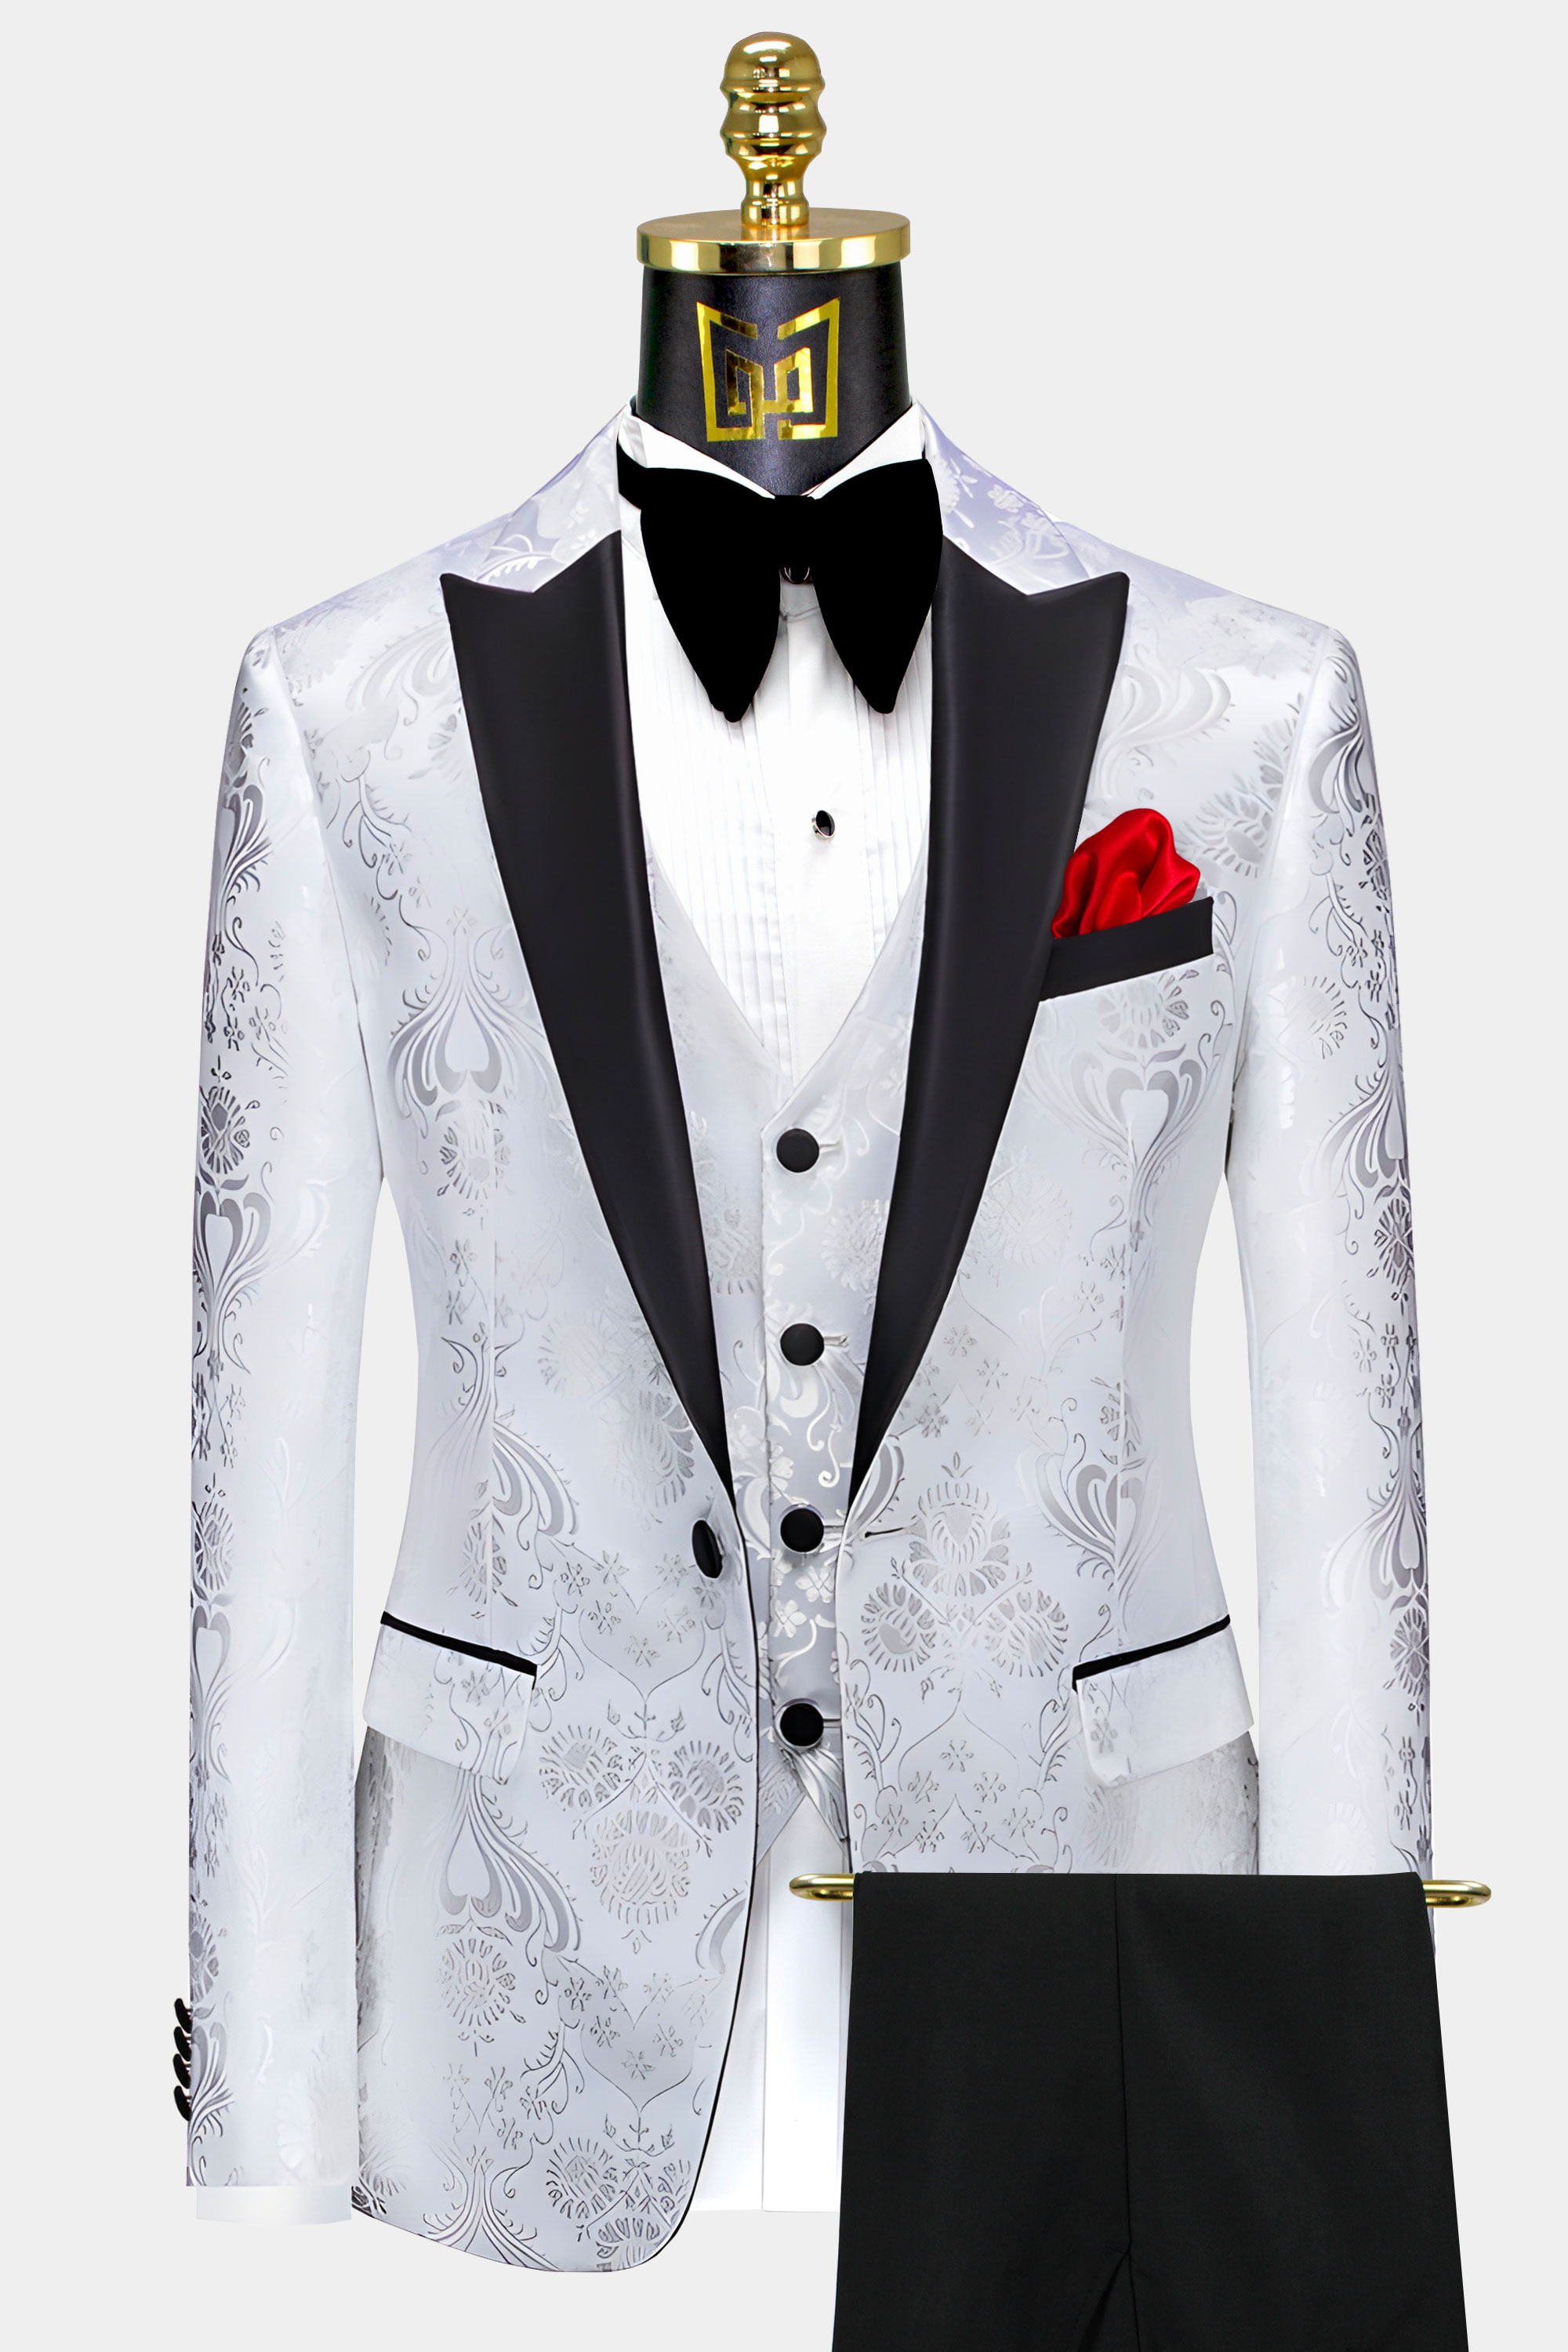 White-Silver-Floral-Tuxedo-Suit-Wedding-Groom-Outfit-from-Gentlemansguru.Com